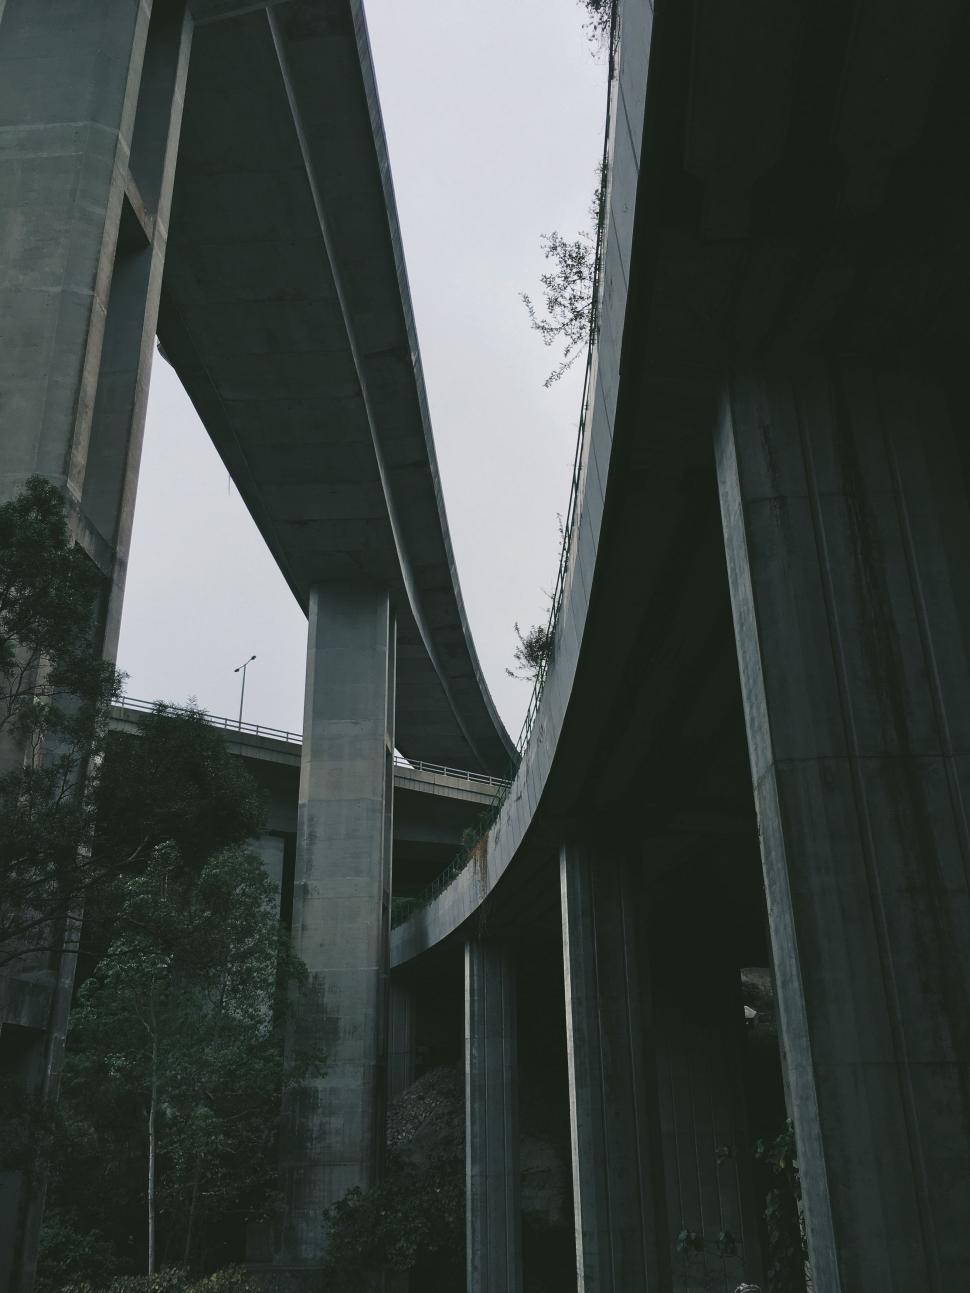 Free Image of Monochrome View of a Bridge 